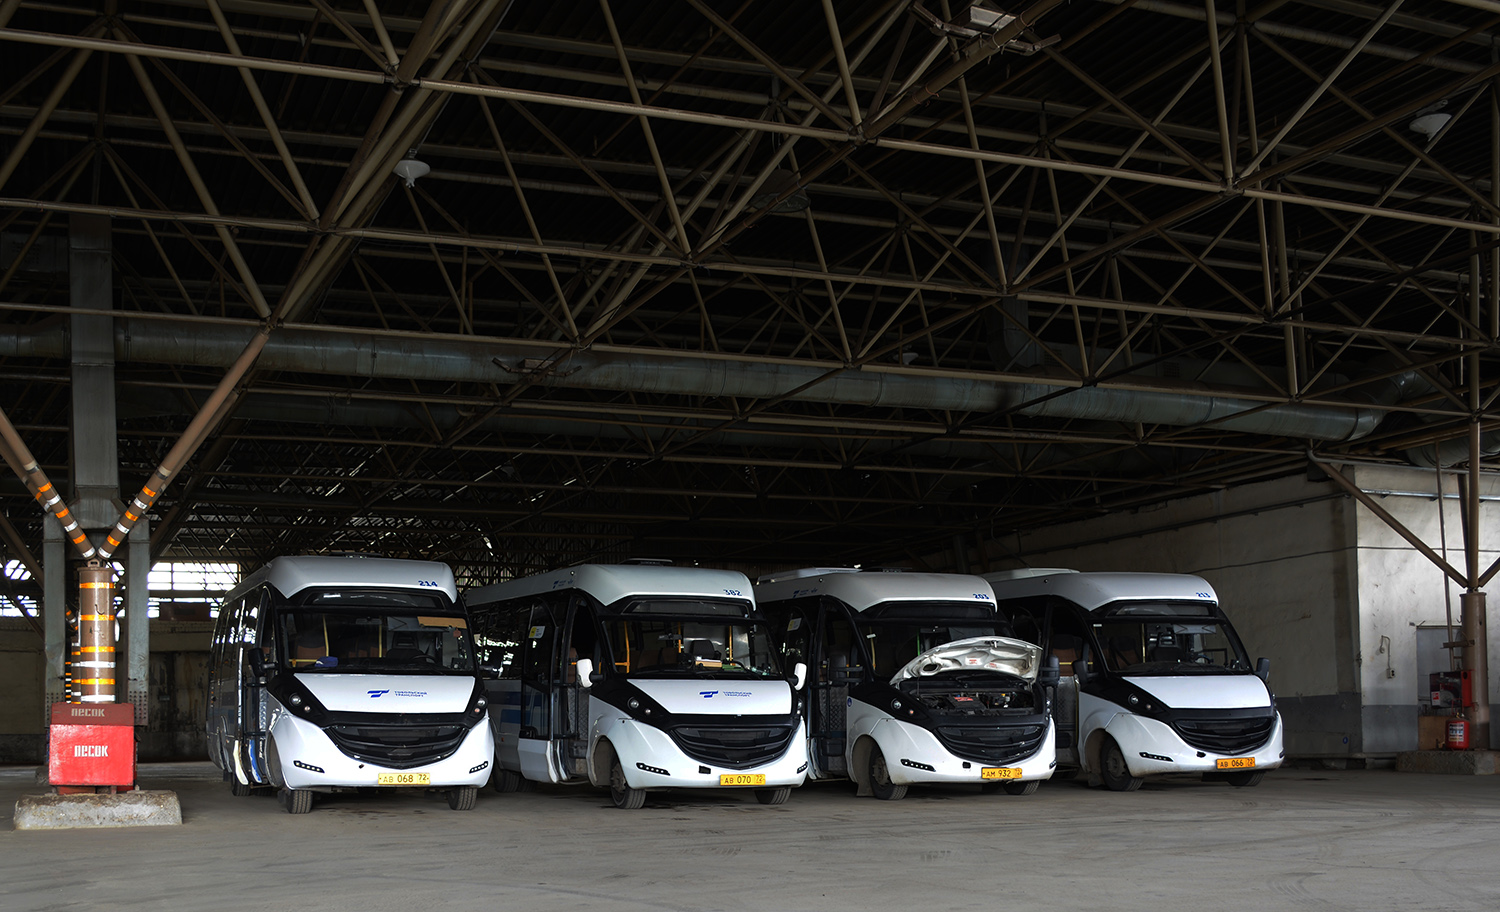 Obwód tiumeński — Buses organizations